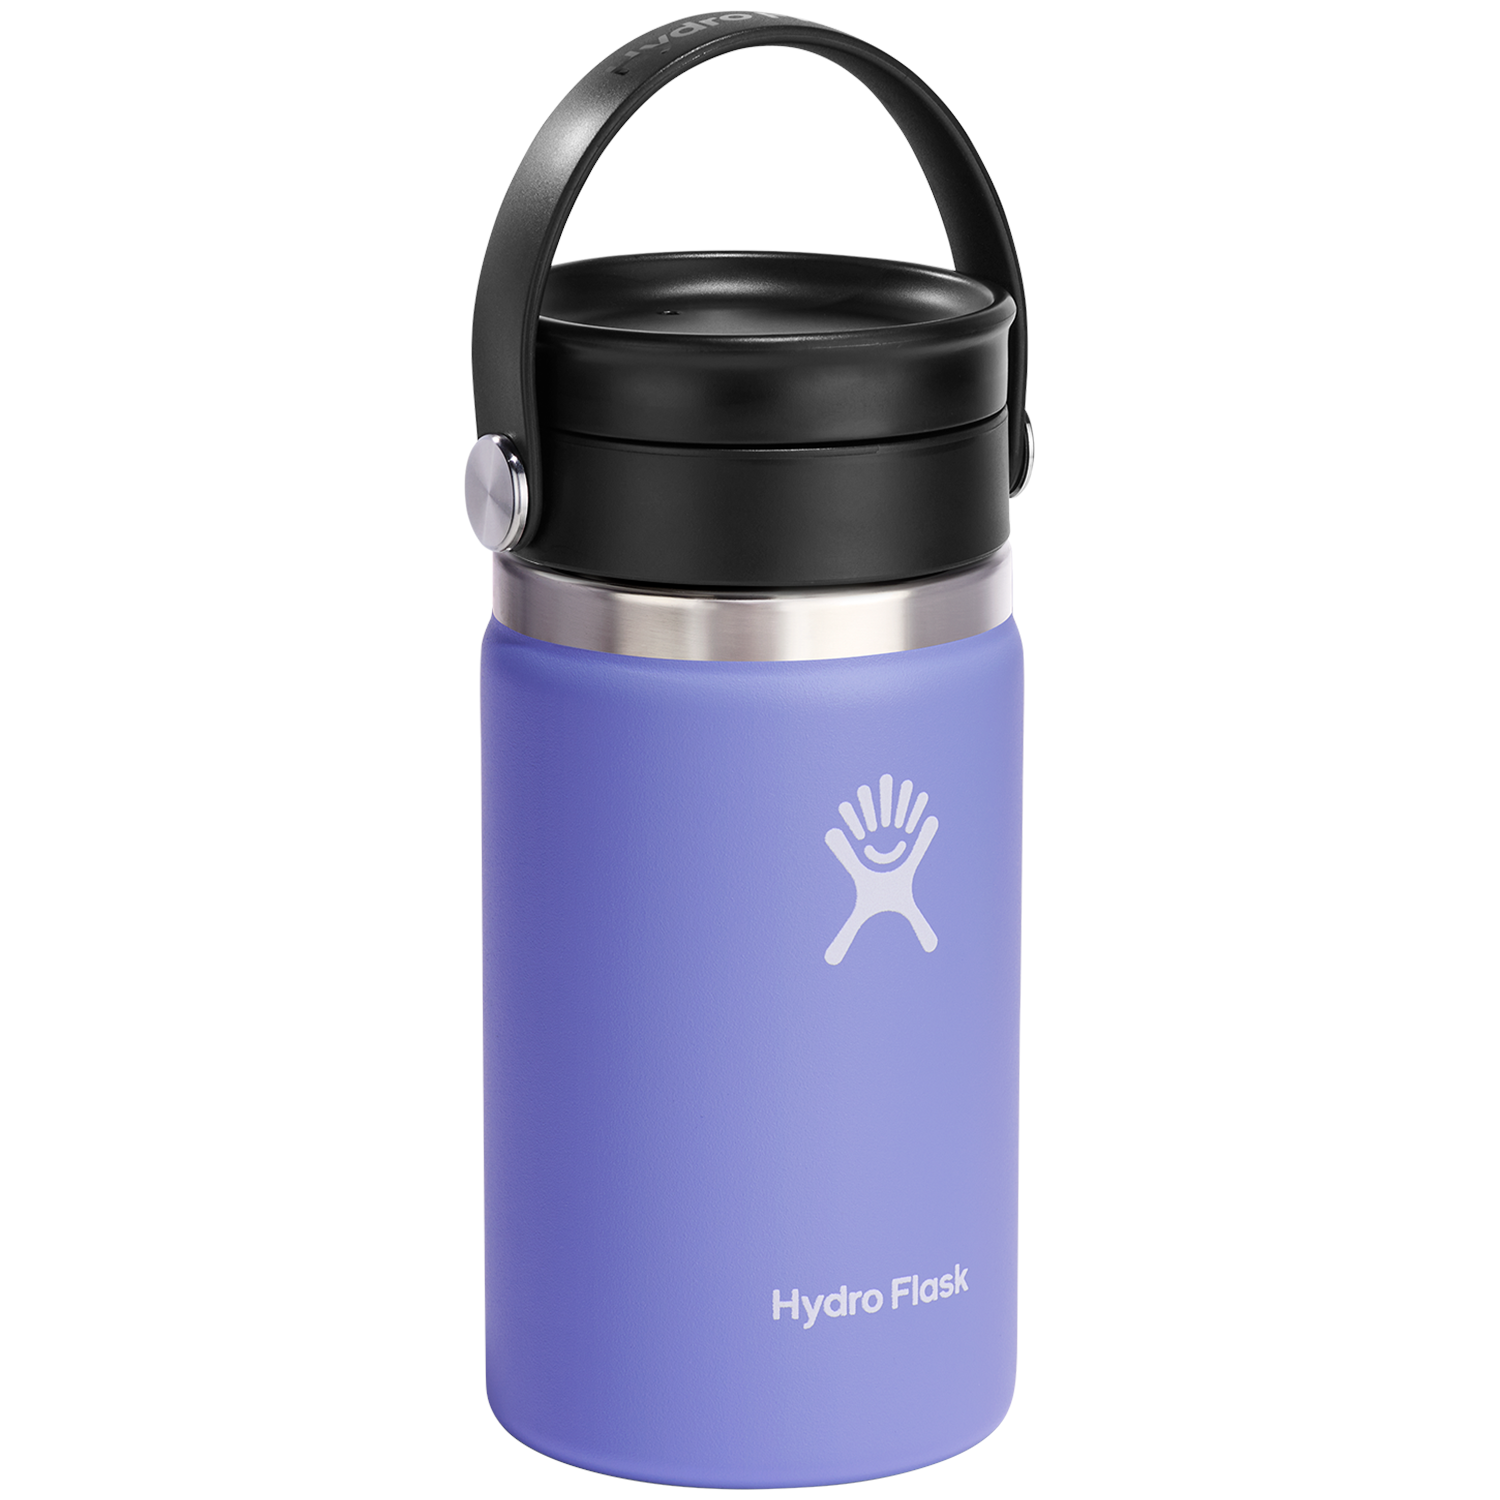 https://images.evo.com/imgp/zoom/167438/997839/hydro-flask-12oz-flex-sip-lid-coffee-bottle-.jpg